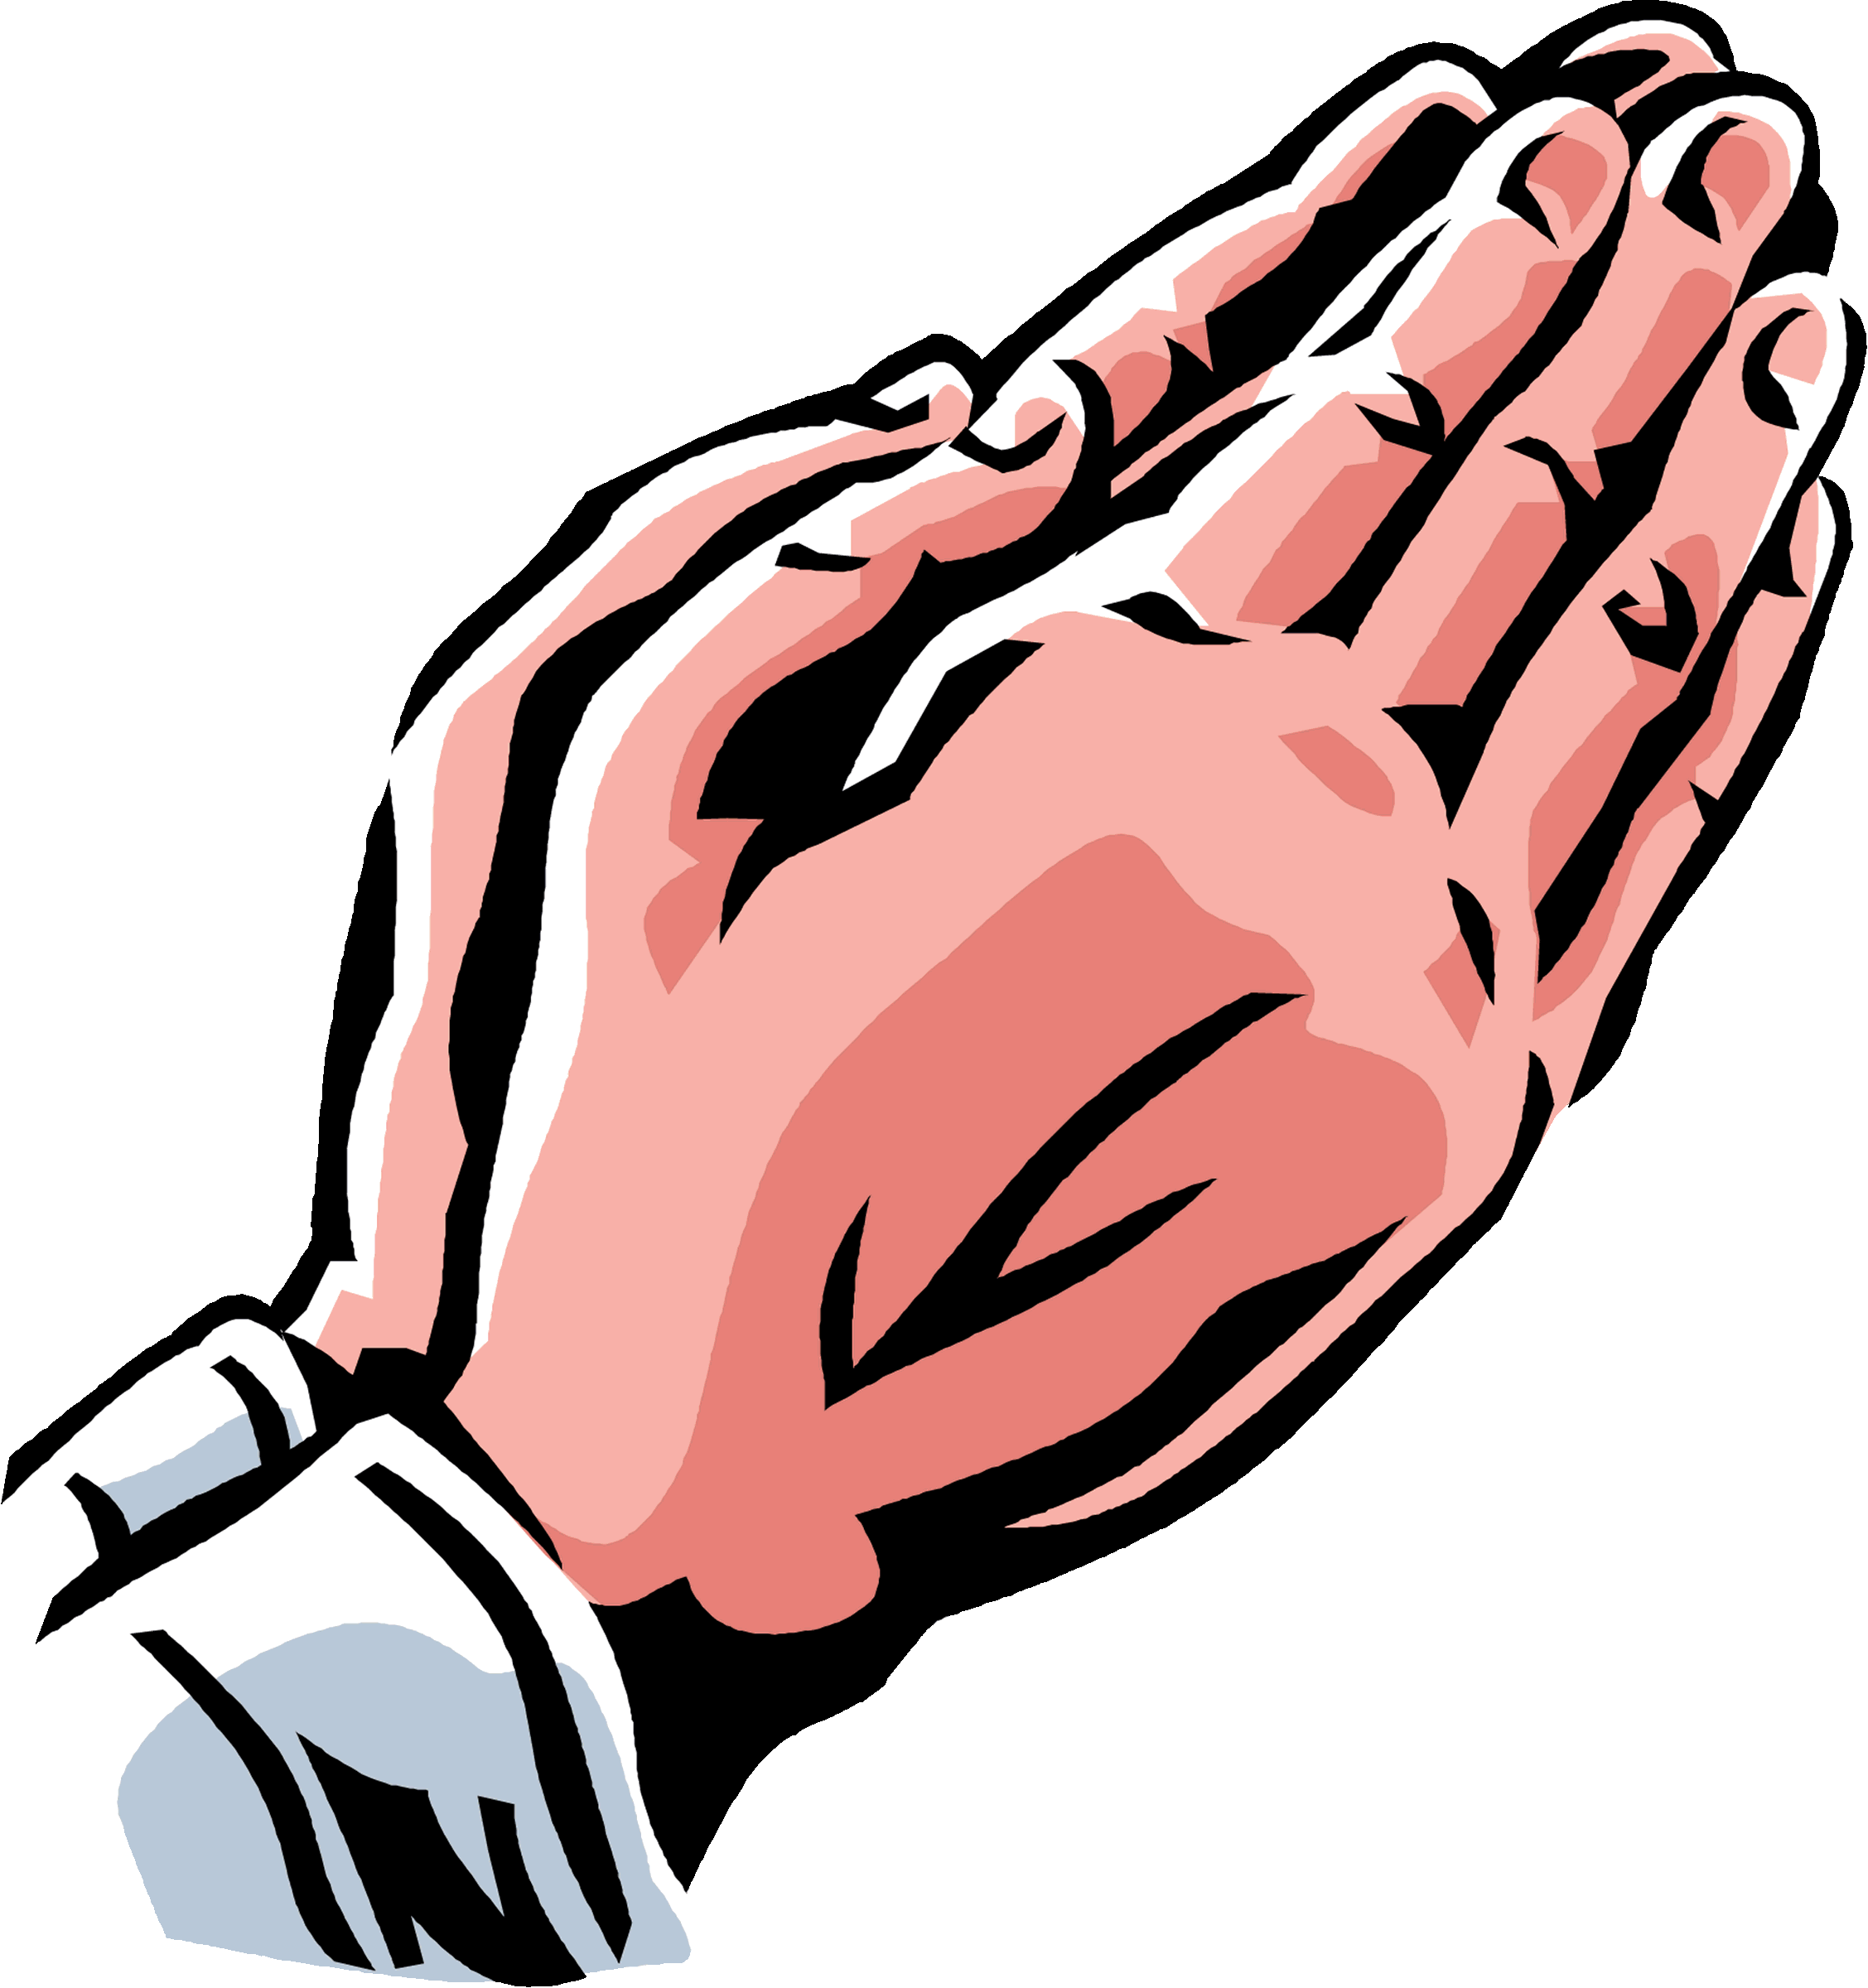 Praying hands praying hand child prayer hands clip art image.